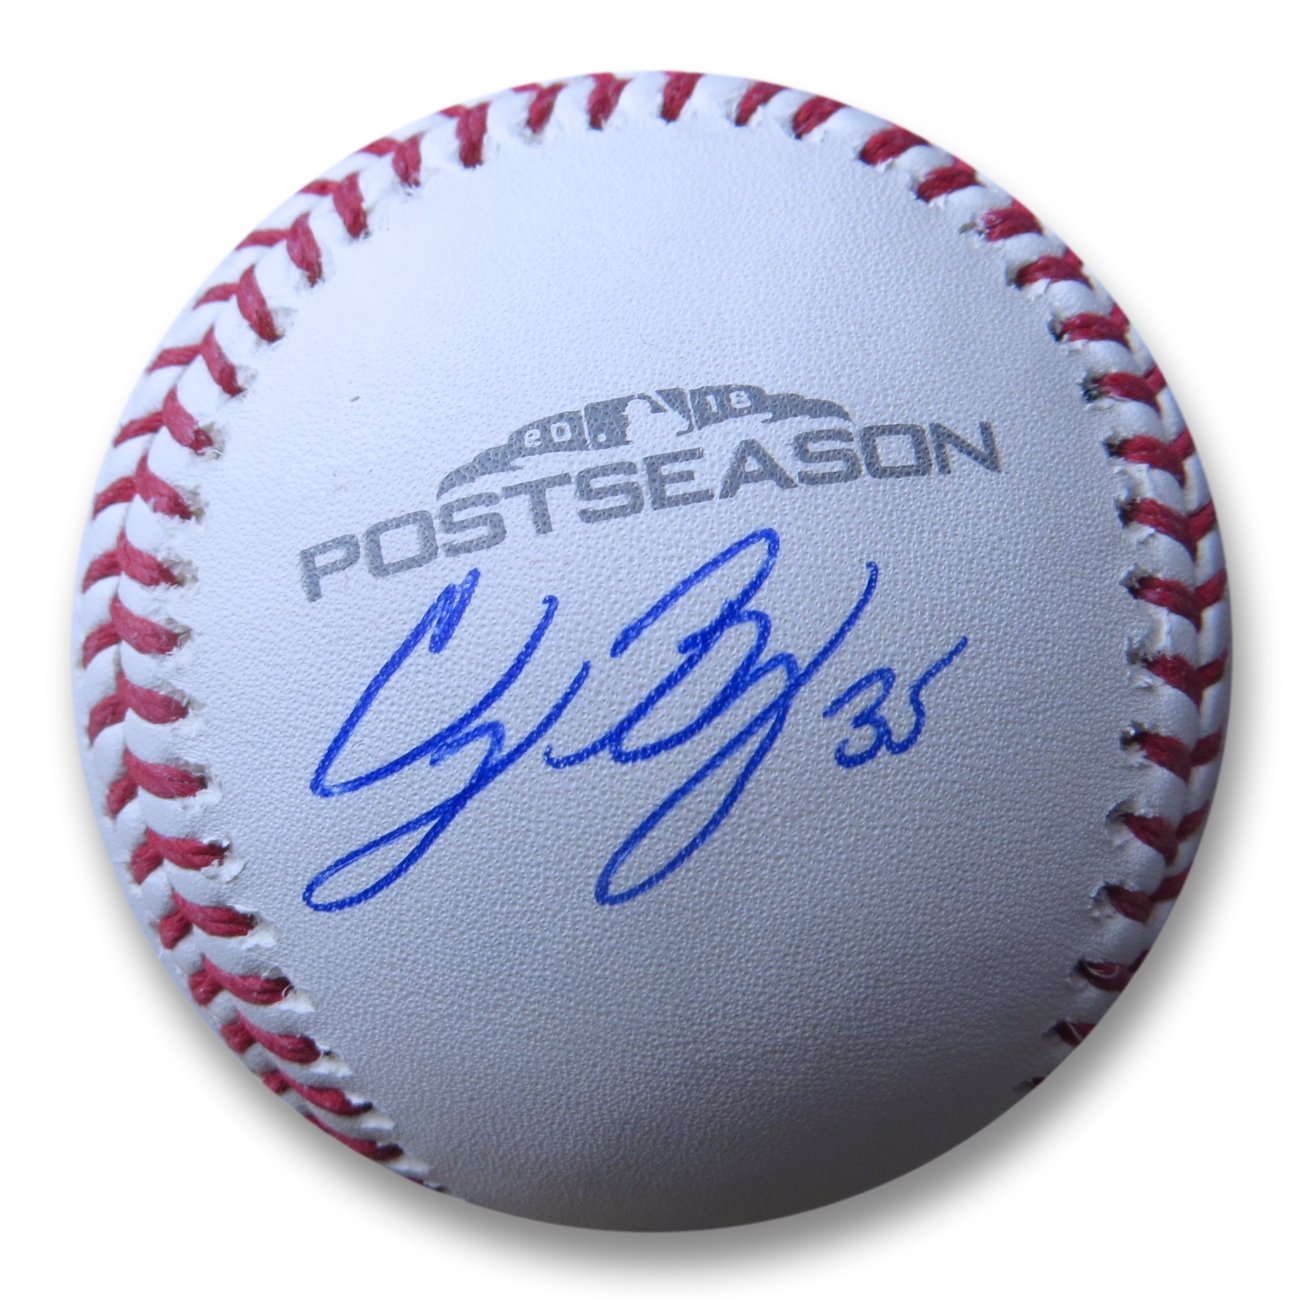 Cody Bellinger Signed Inscribed 17 NL ROY Dodgers Jersey MLB COA  Autograph LA